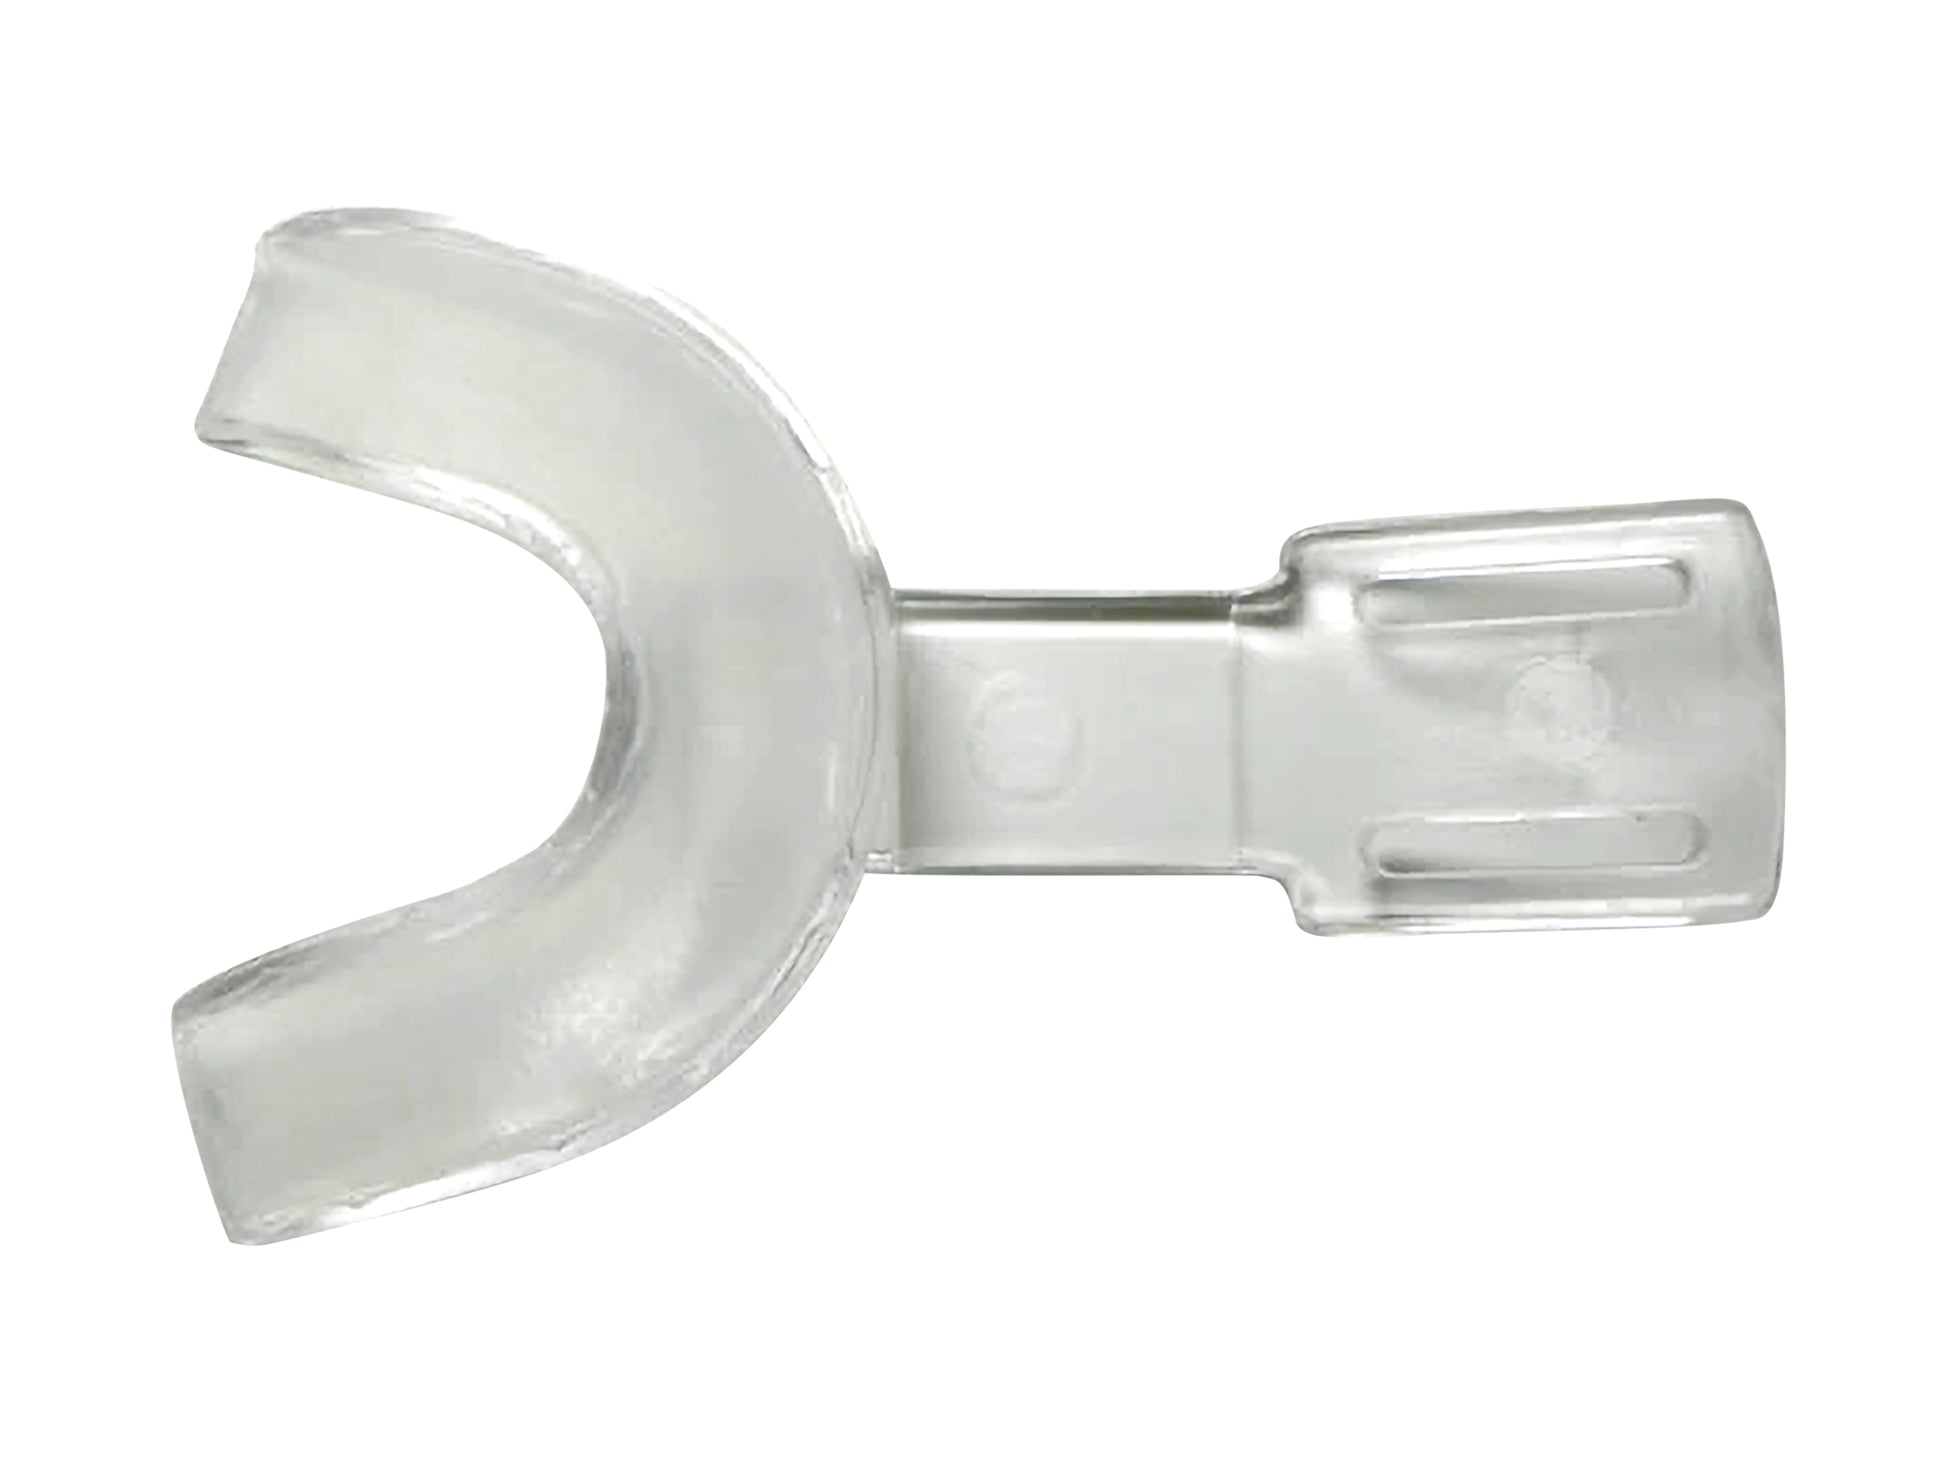 Mouthpiece for the No Mask sleep apnea system